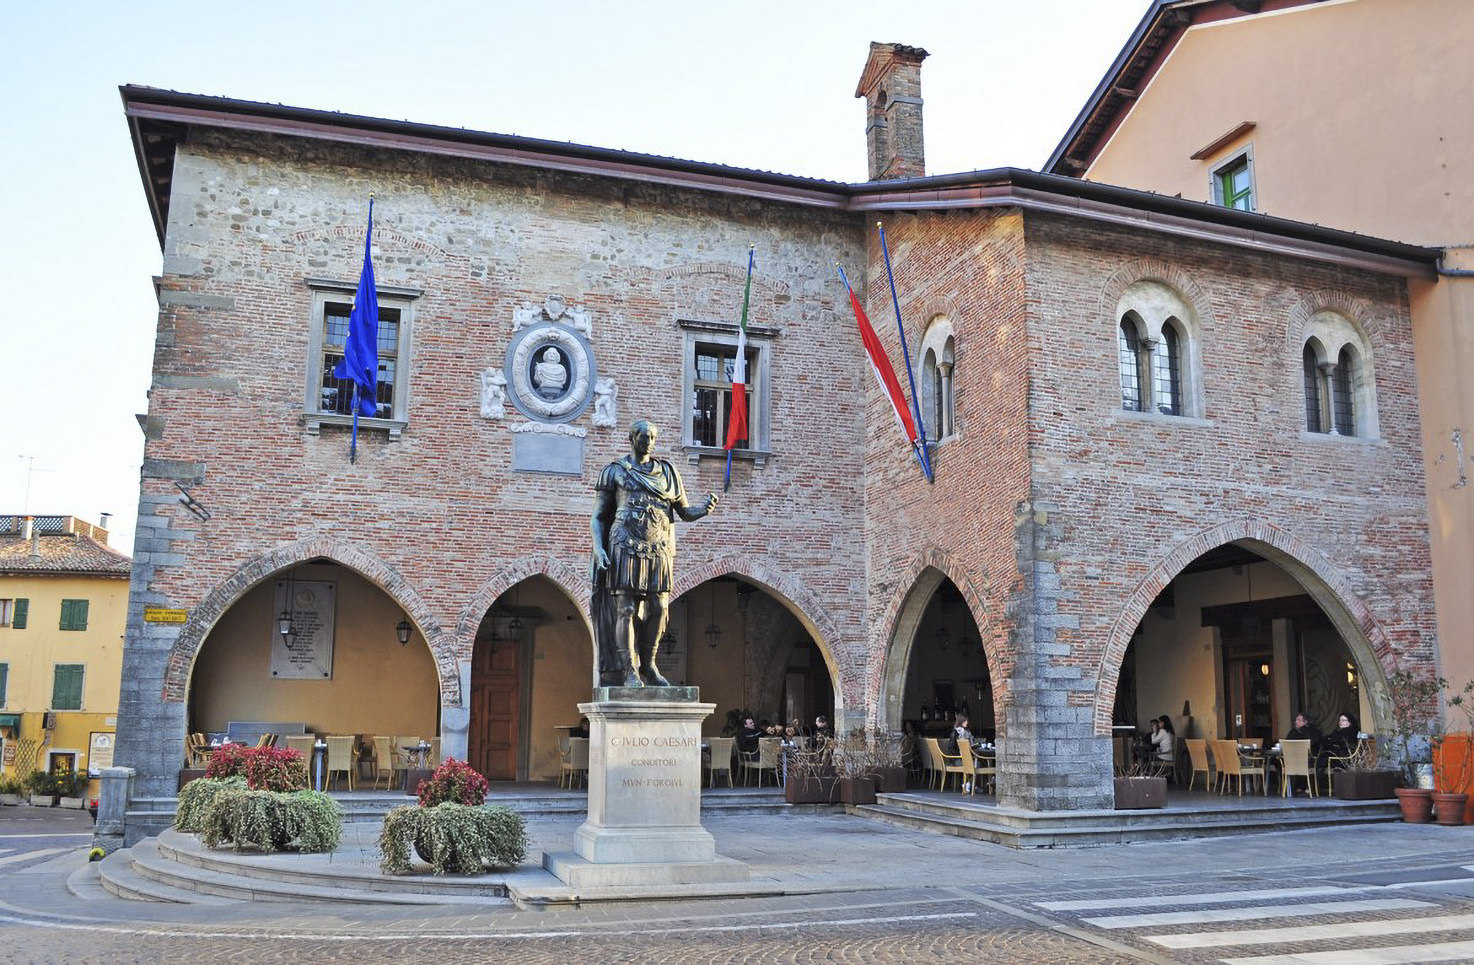 Cividale Town Hall